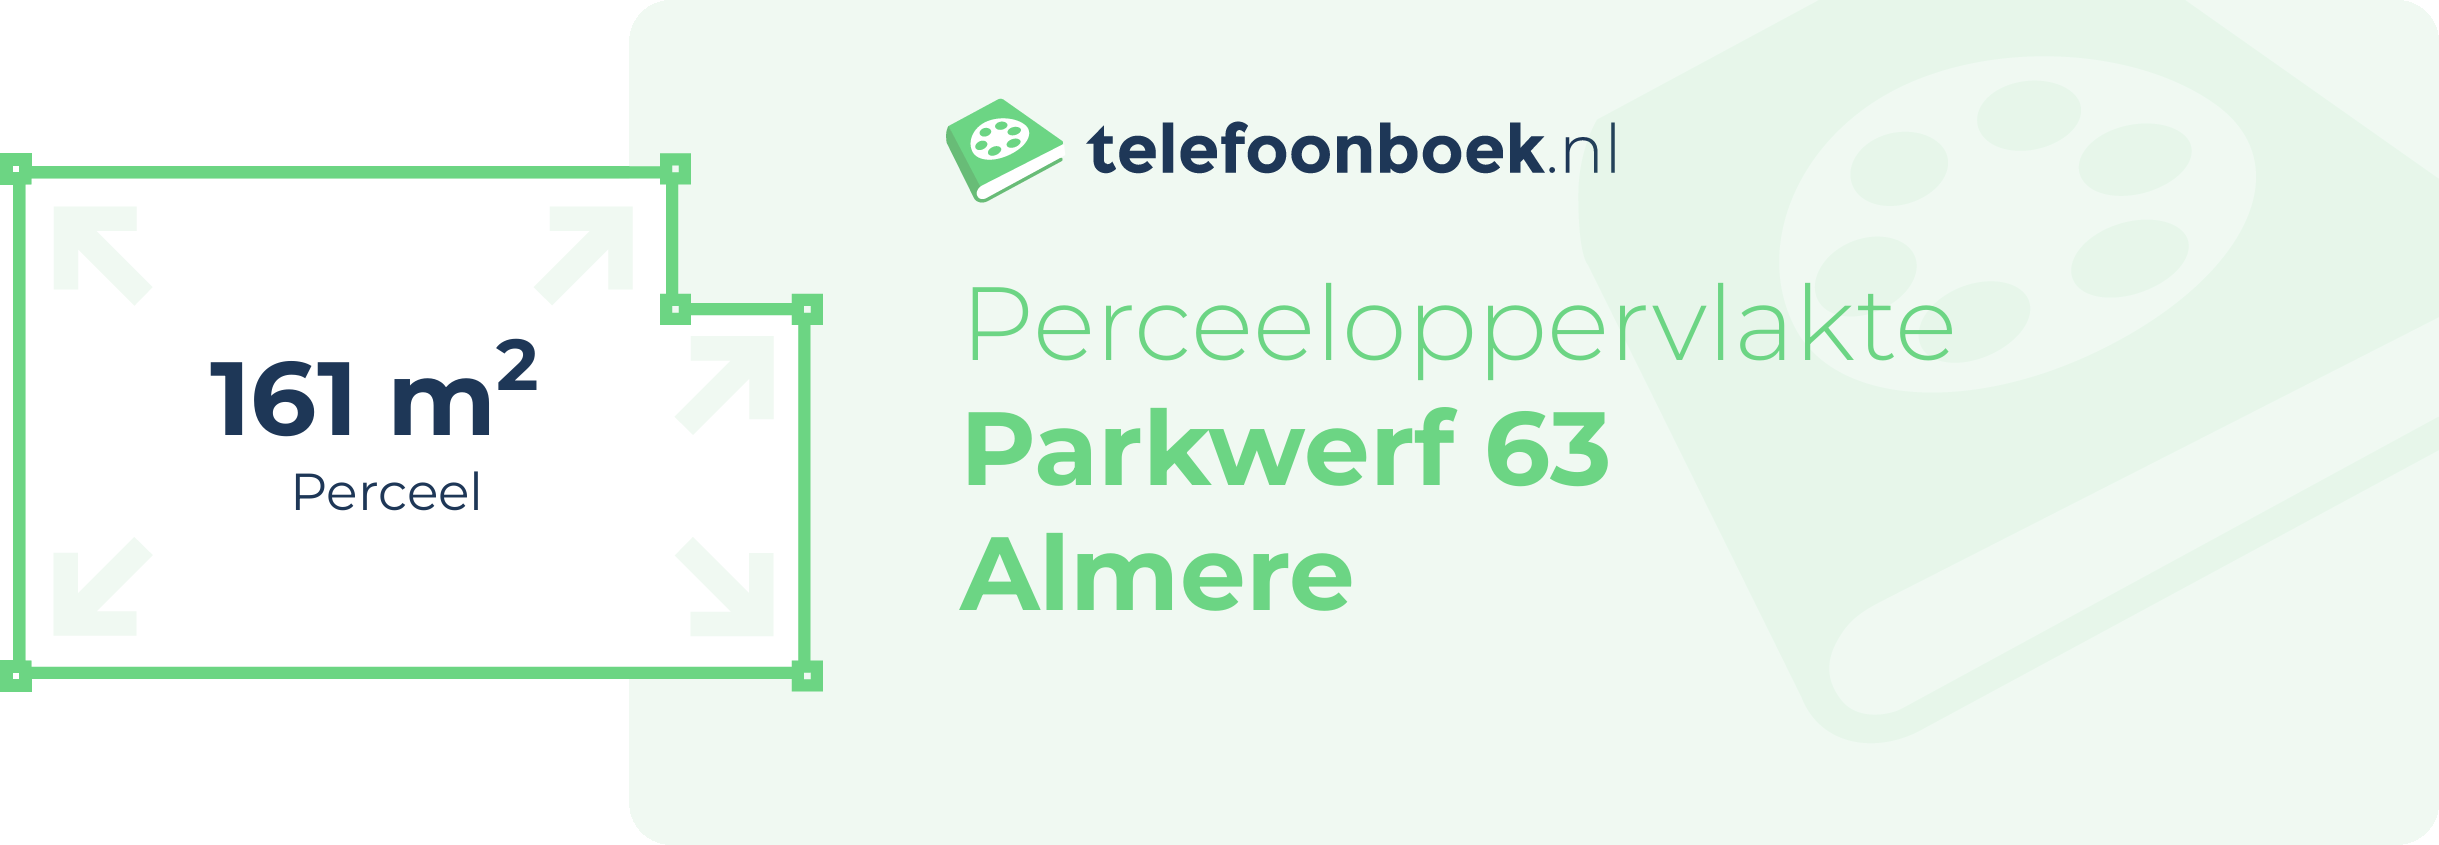 Perceeloppervlakte Parkwerf 63 Almere